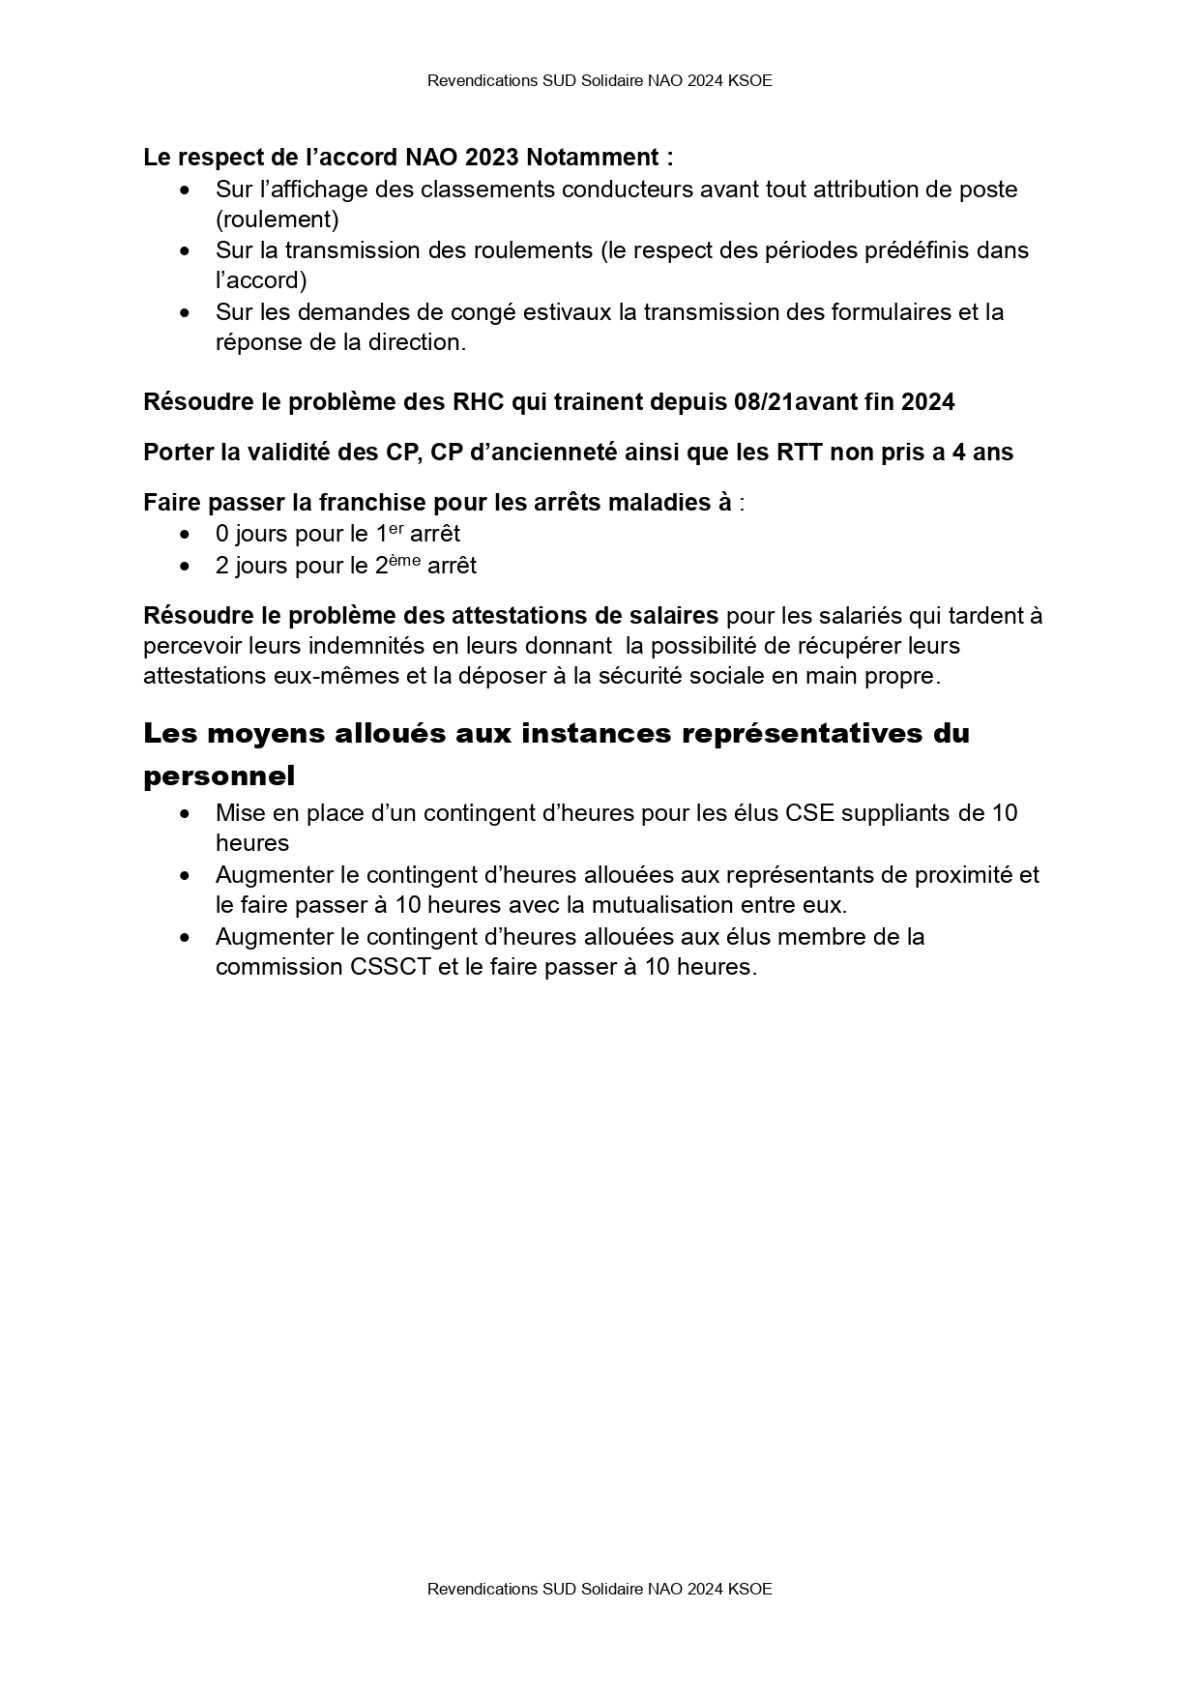 SUD URBAINS / Revendications NAO 2024 KEOLIS Seine-et-Oise-Est